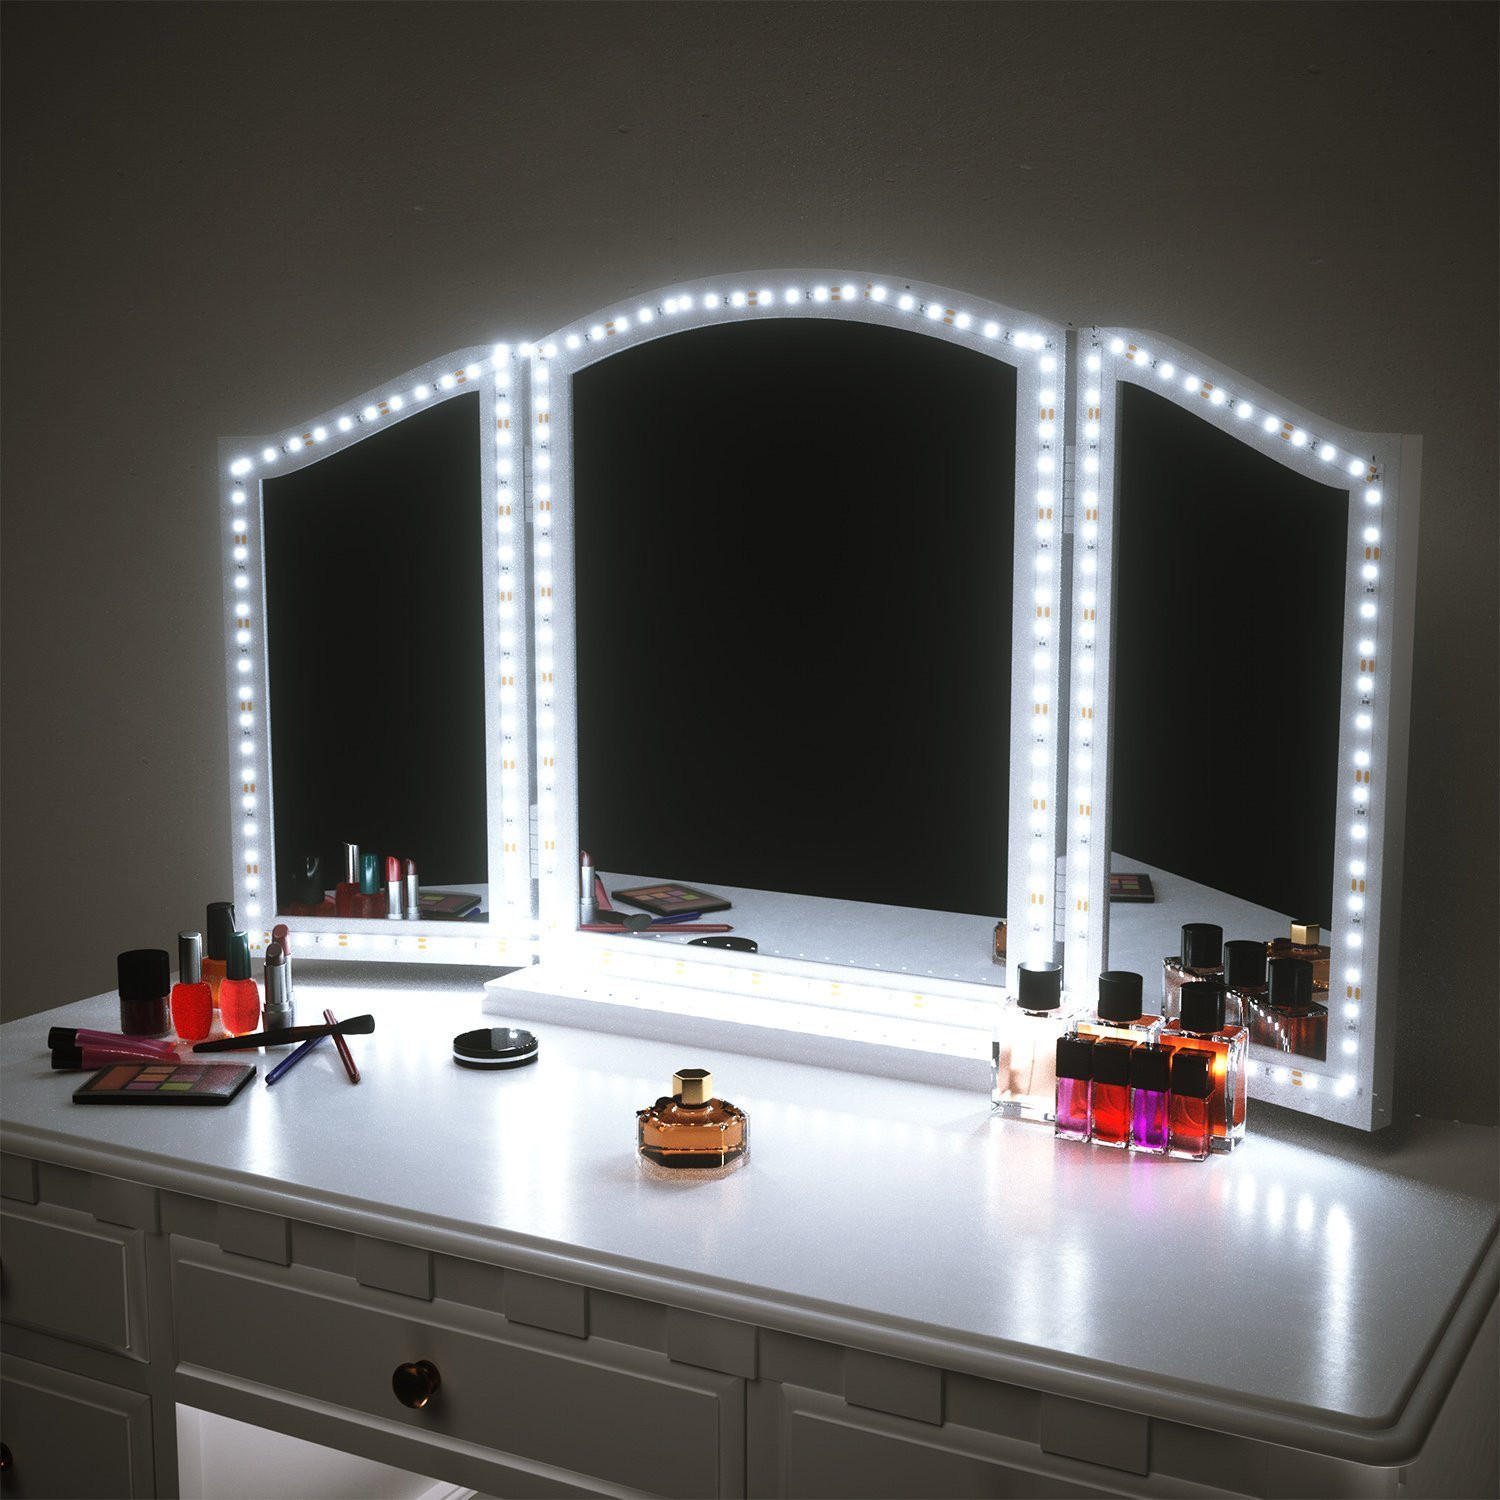 3 Way Bathroom Mirror
 Amazon Houseables Trifold Vanity Mirror 3 Way 31” x